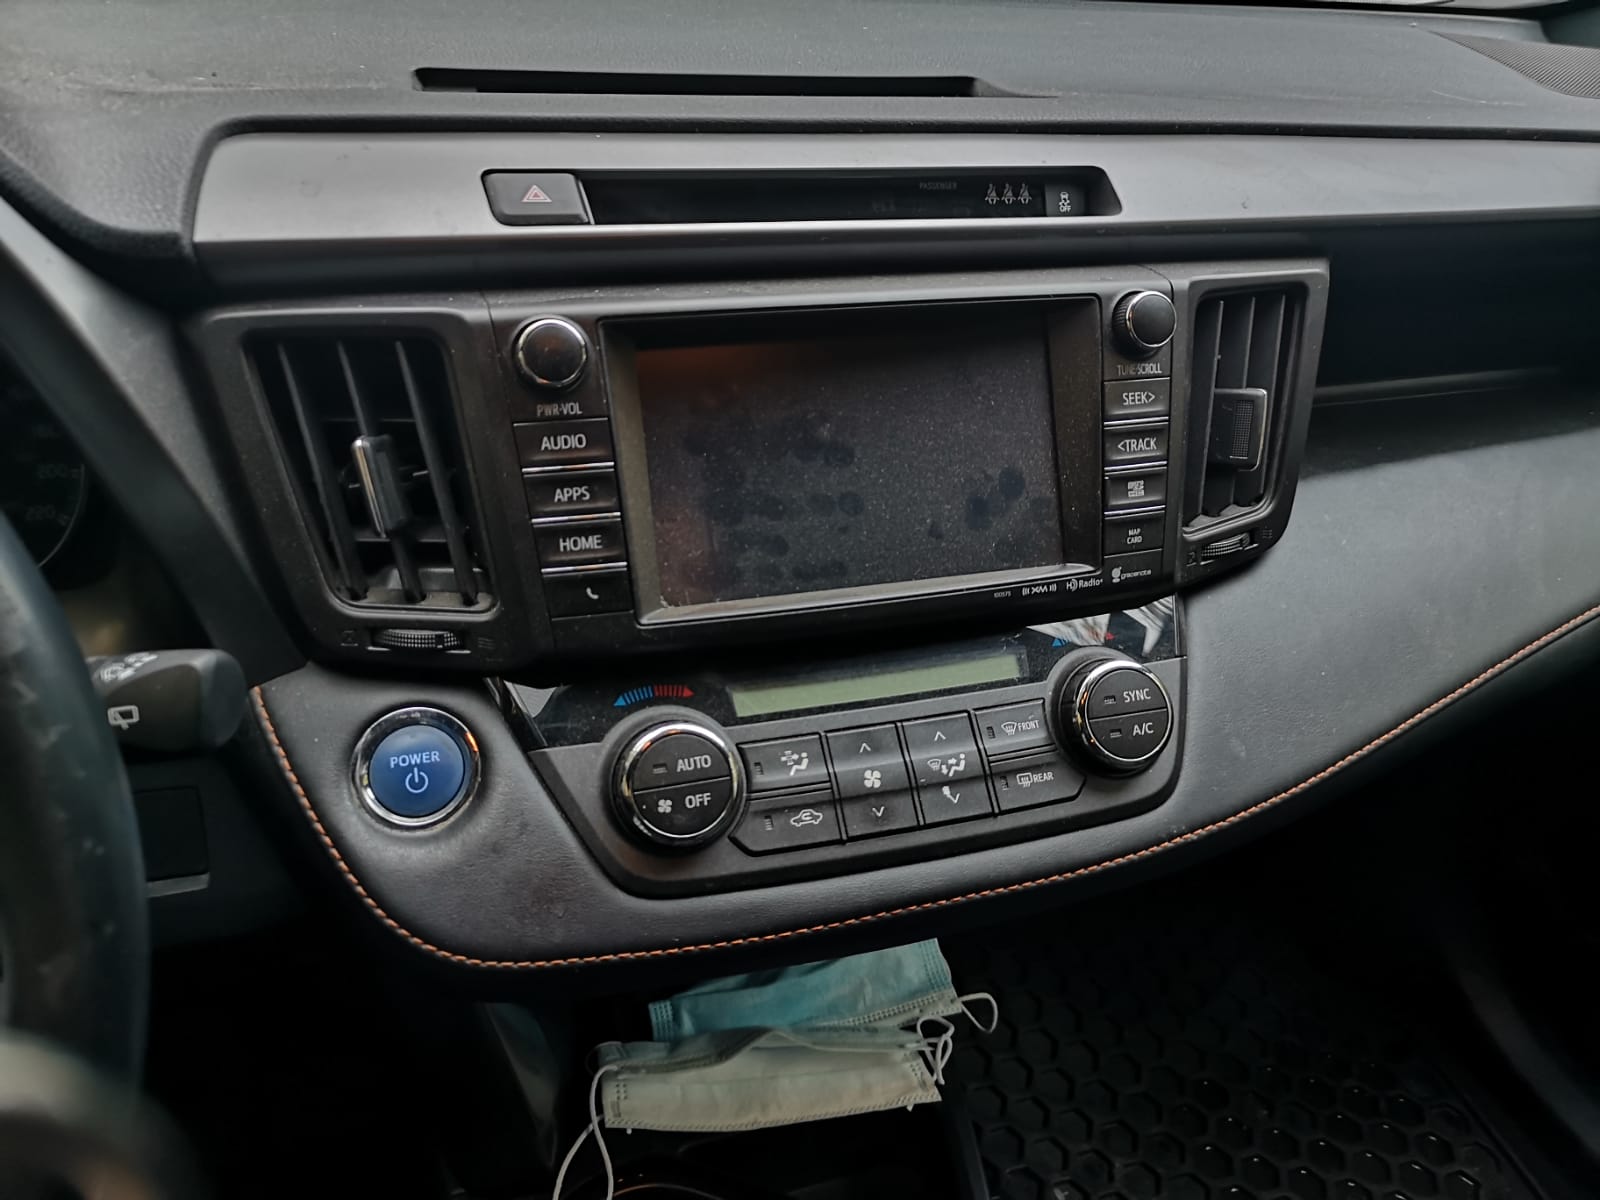 2018 Toyota Rav4 #B-KEL-0596 Located in Kelowna